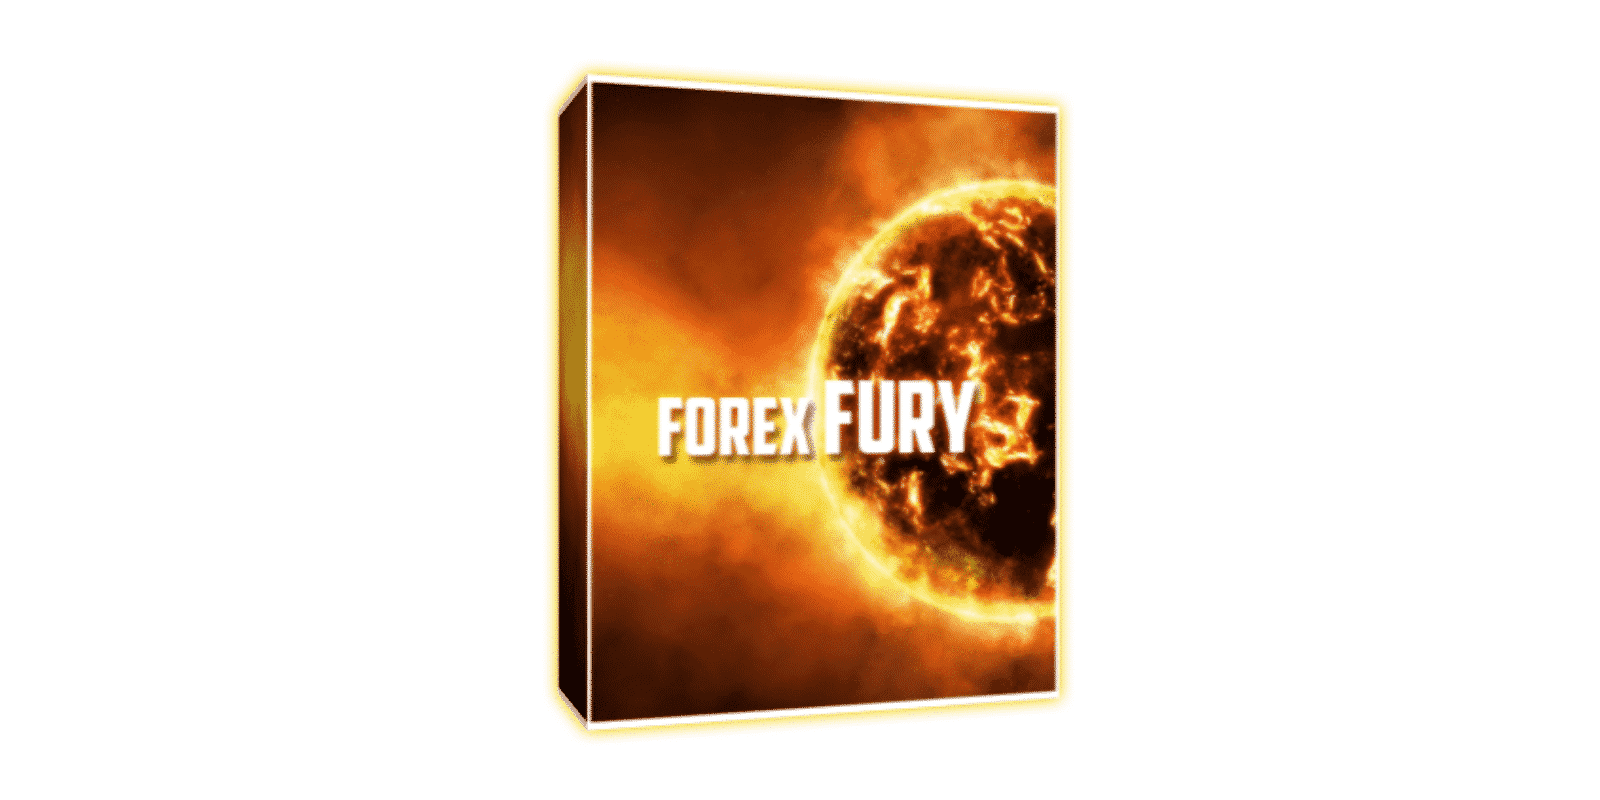 Forex fury v4 free download